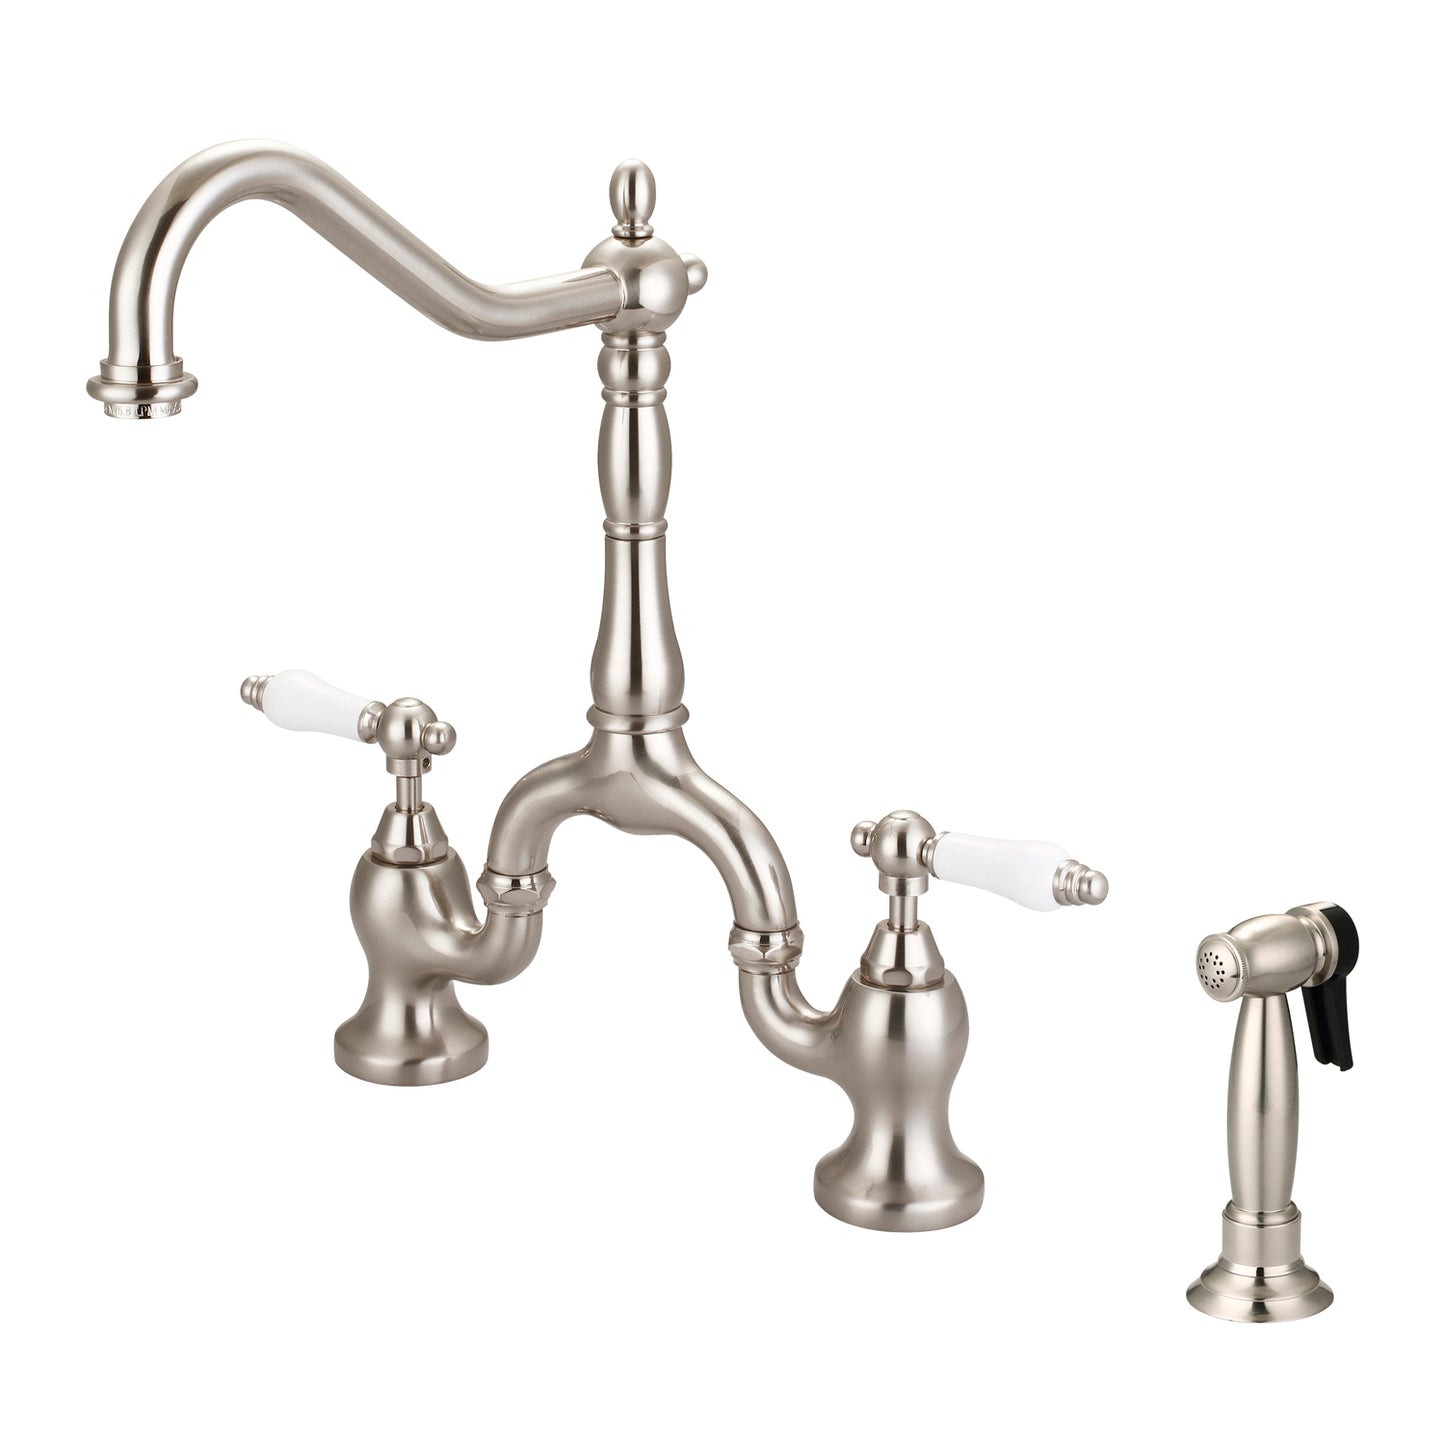 Carlton Kitchen Bridge Faucet, Sidesprayer & Porcelain Lever Handles, Brushed Nickel